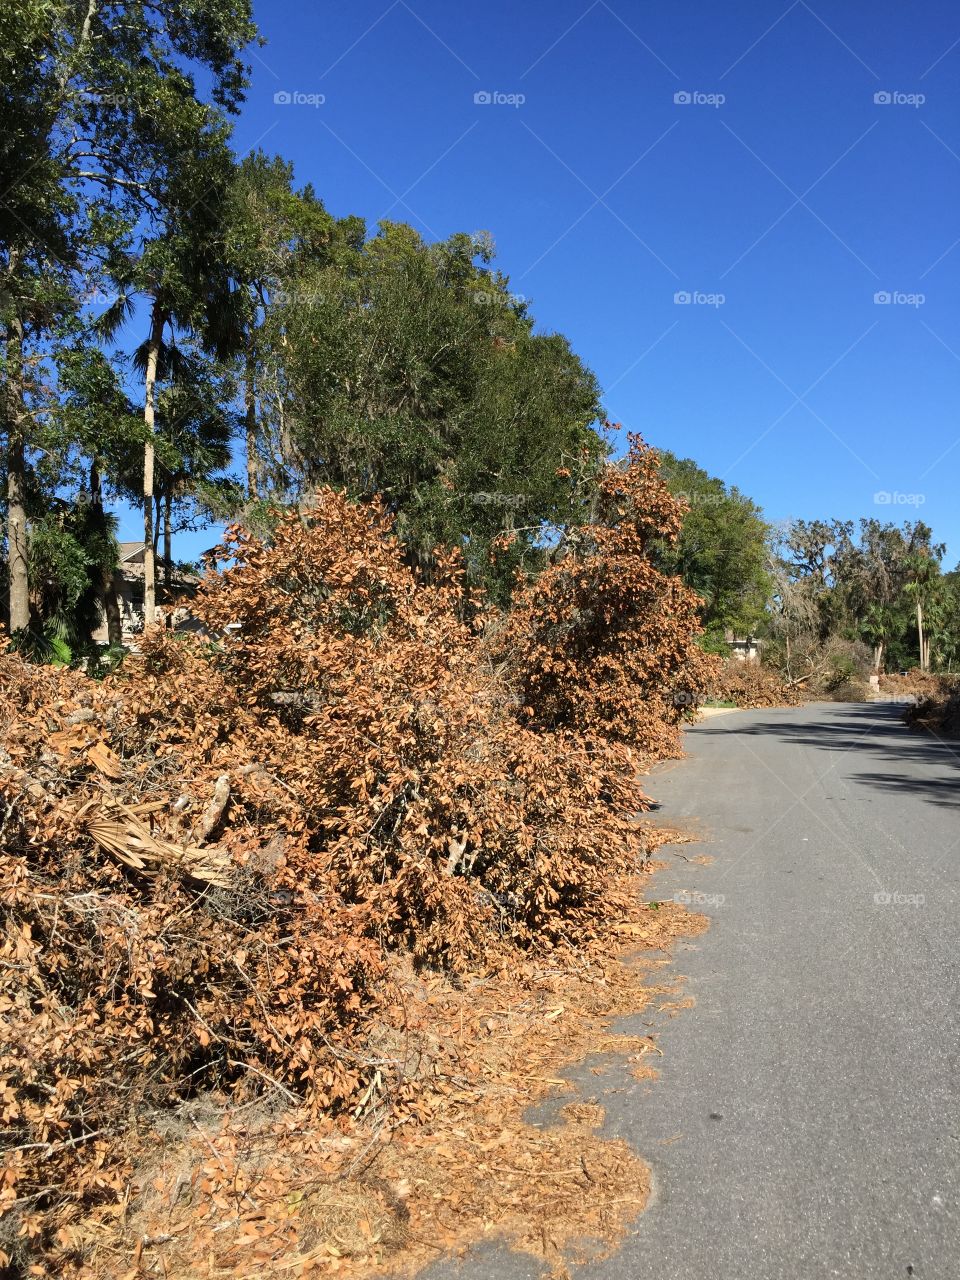 Hurricane Matthew aftermath in Florida where debris still clogs neighborhood roads.